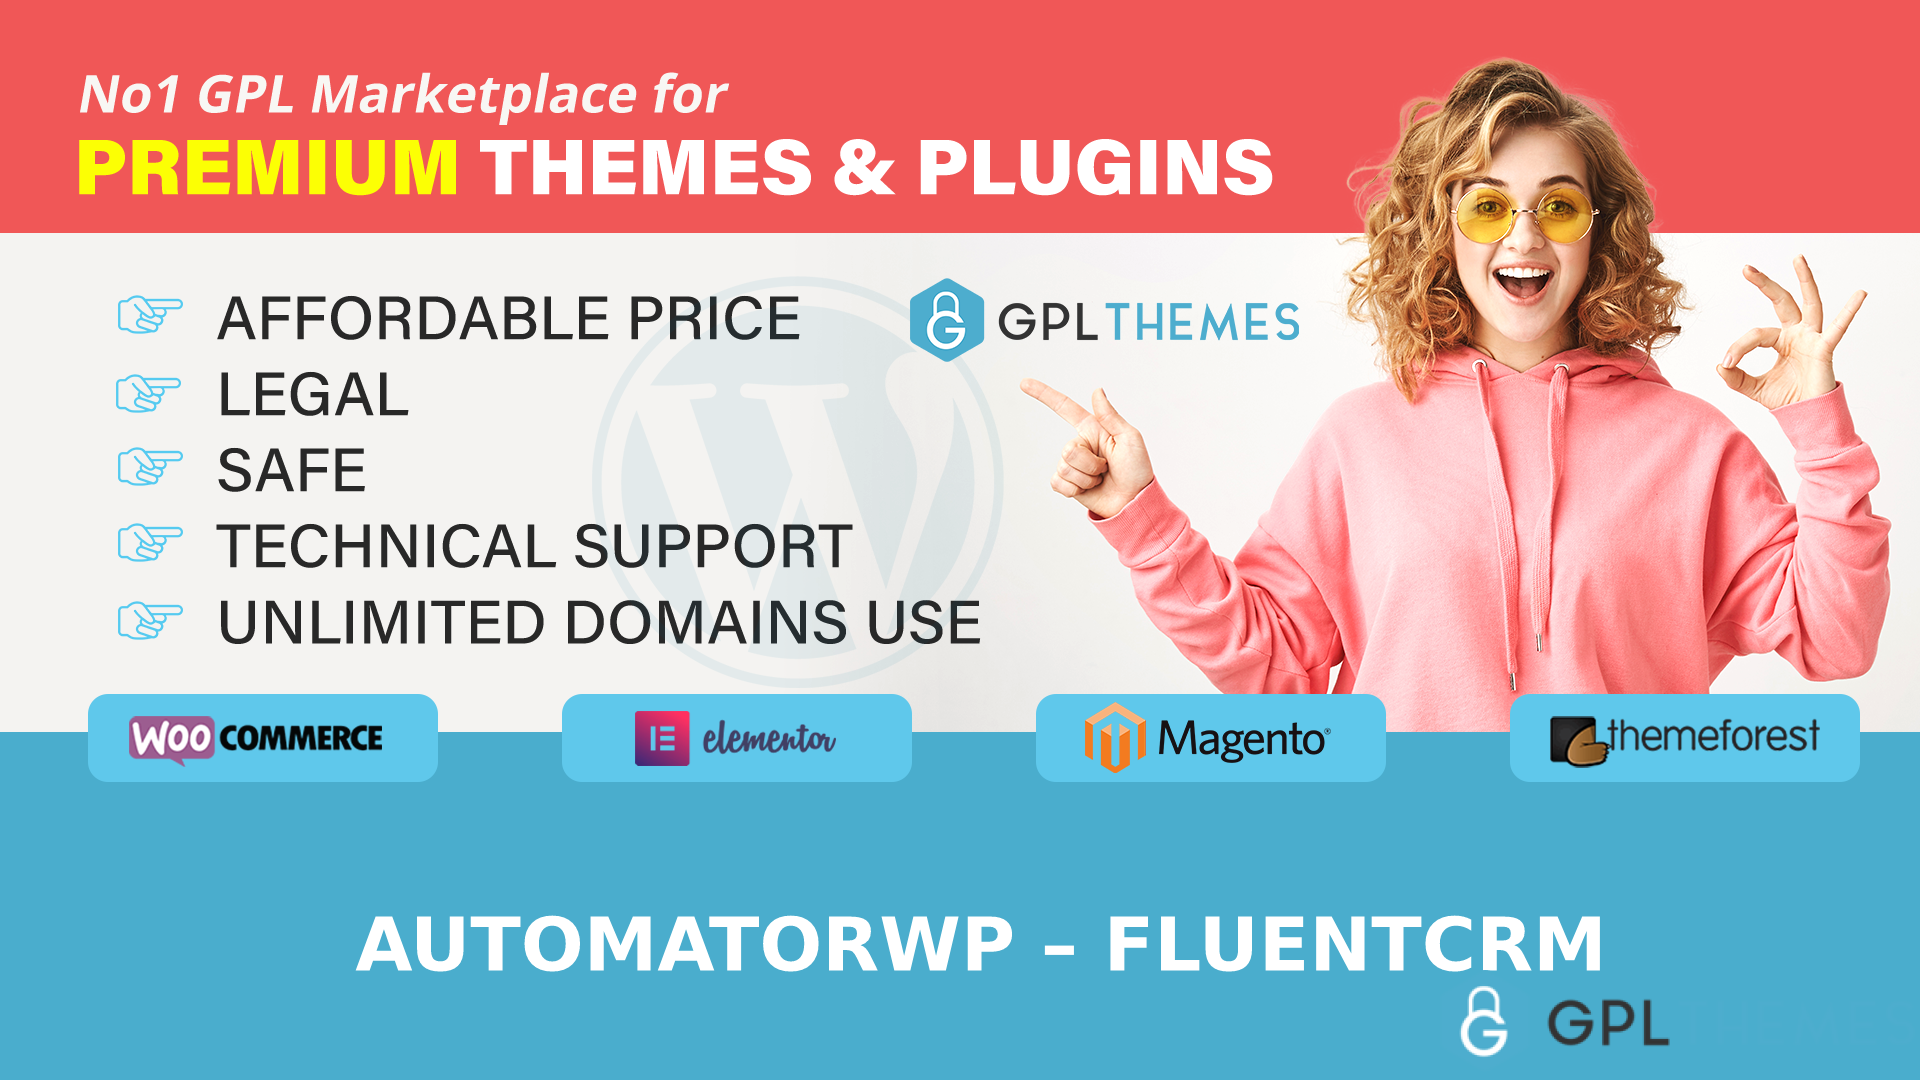 AutomatorWP – FluentCRM